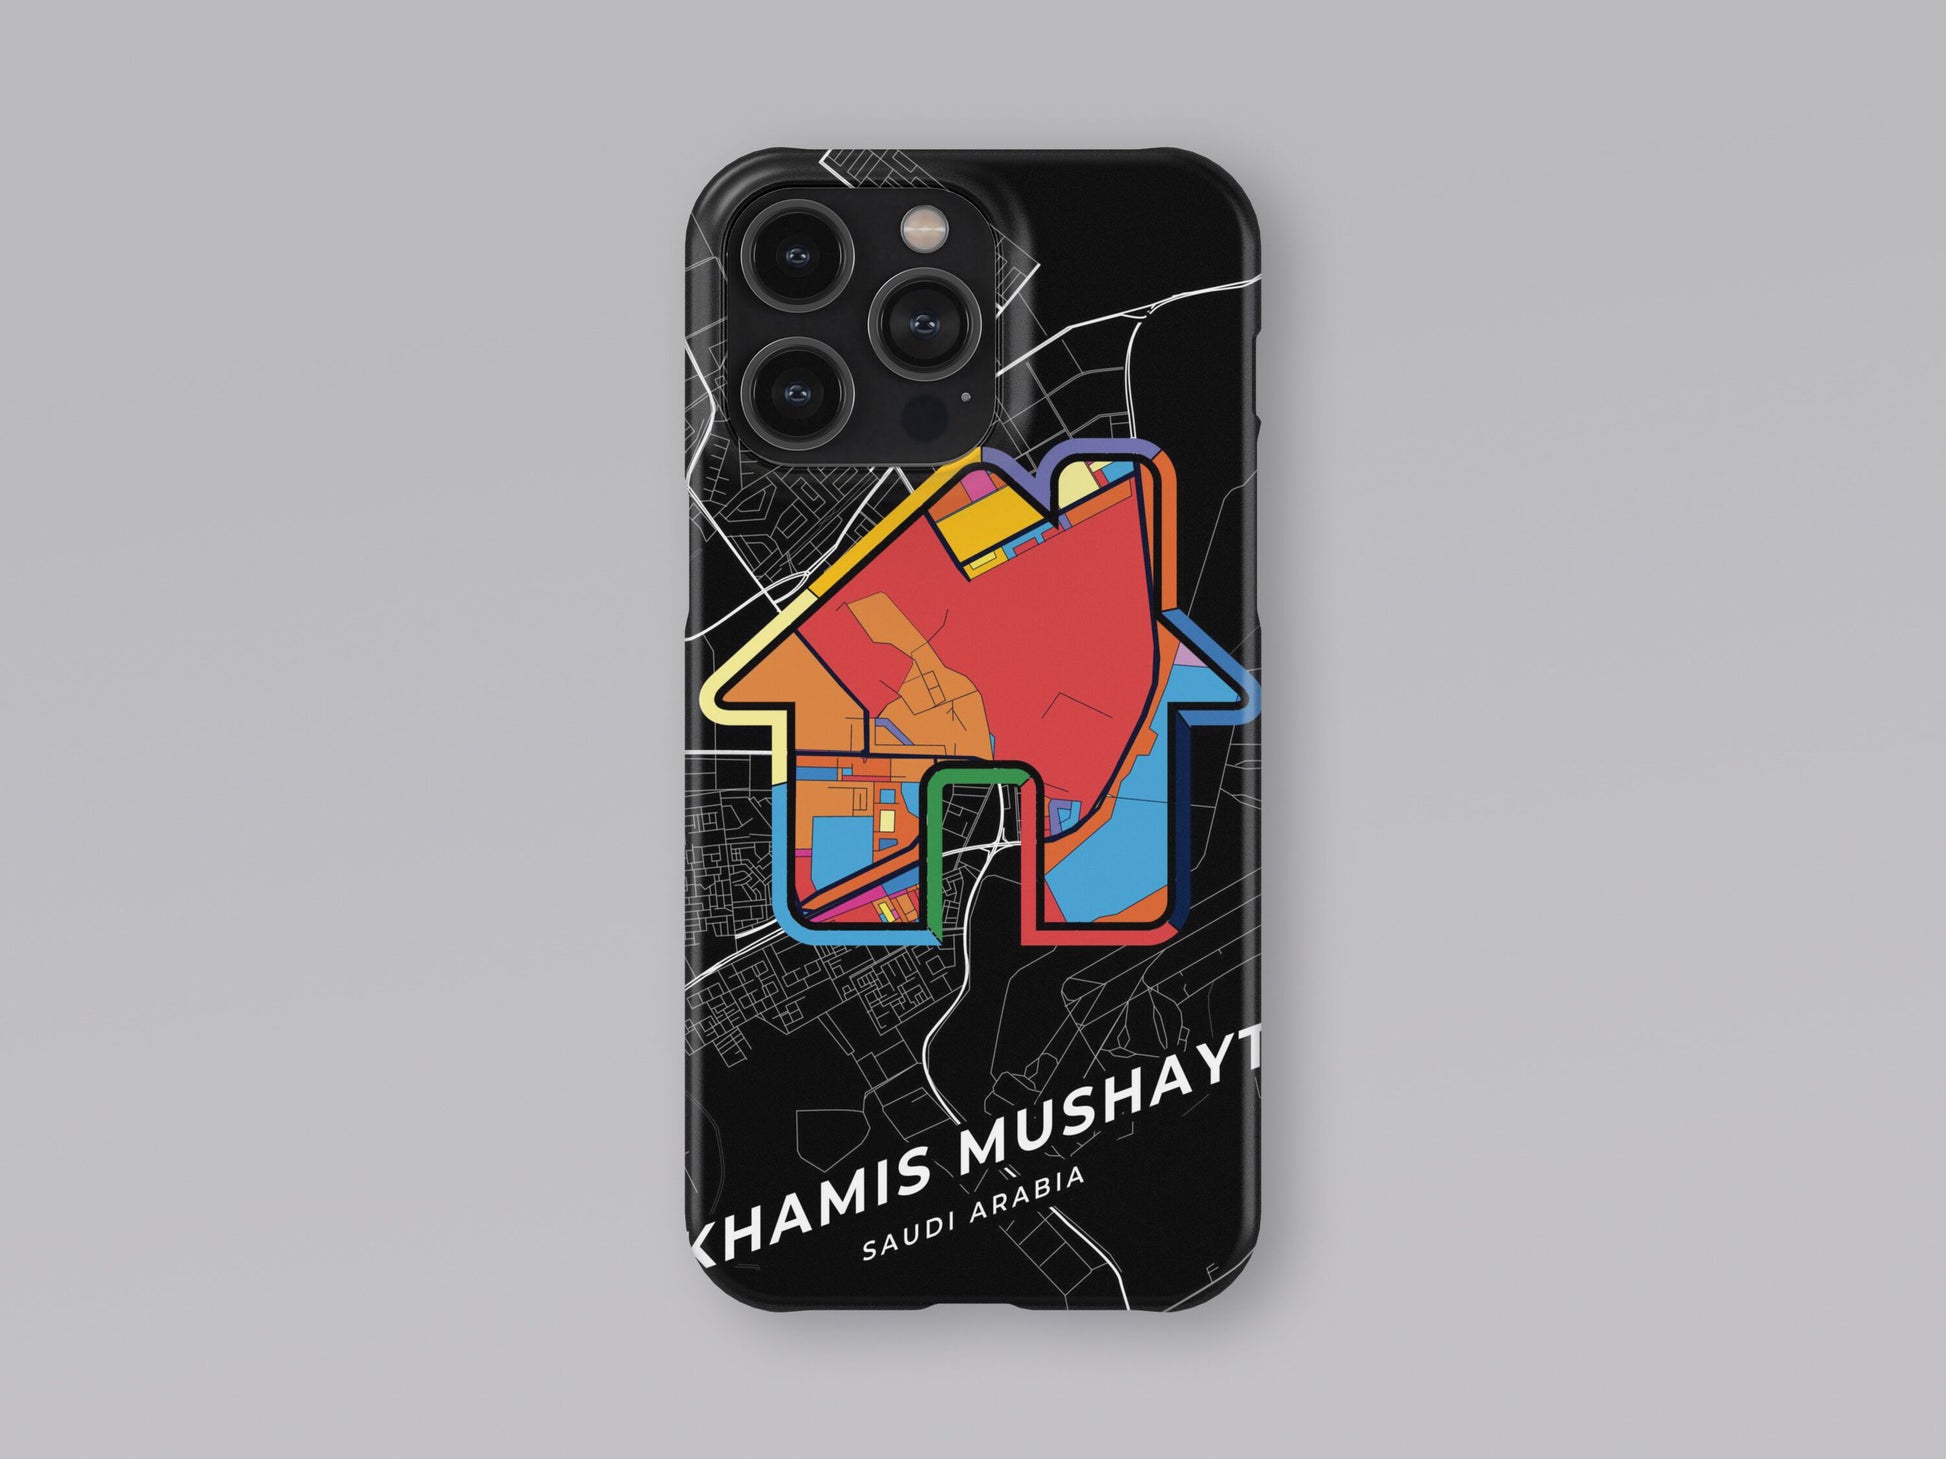 Khamis Mushayt Saudi Arabia slim phone case with colorful icon. Birthday, wedding or housewarming gift. Couple match cases. 3